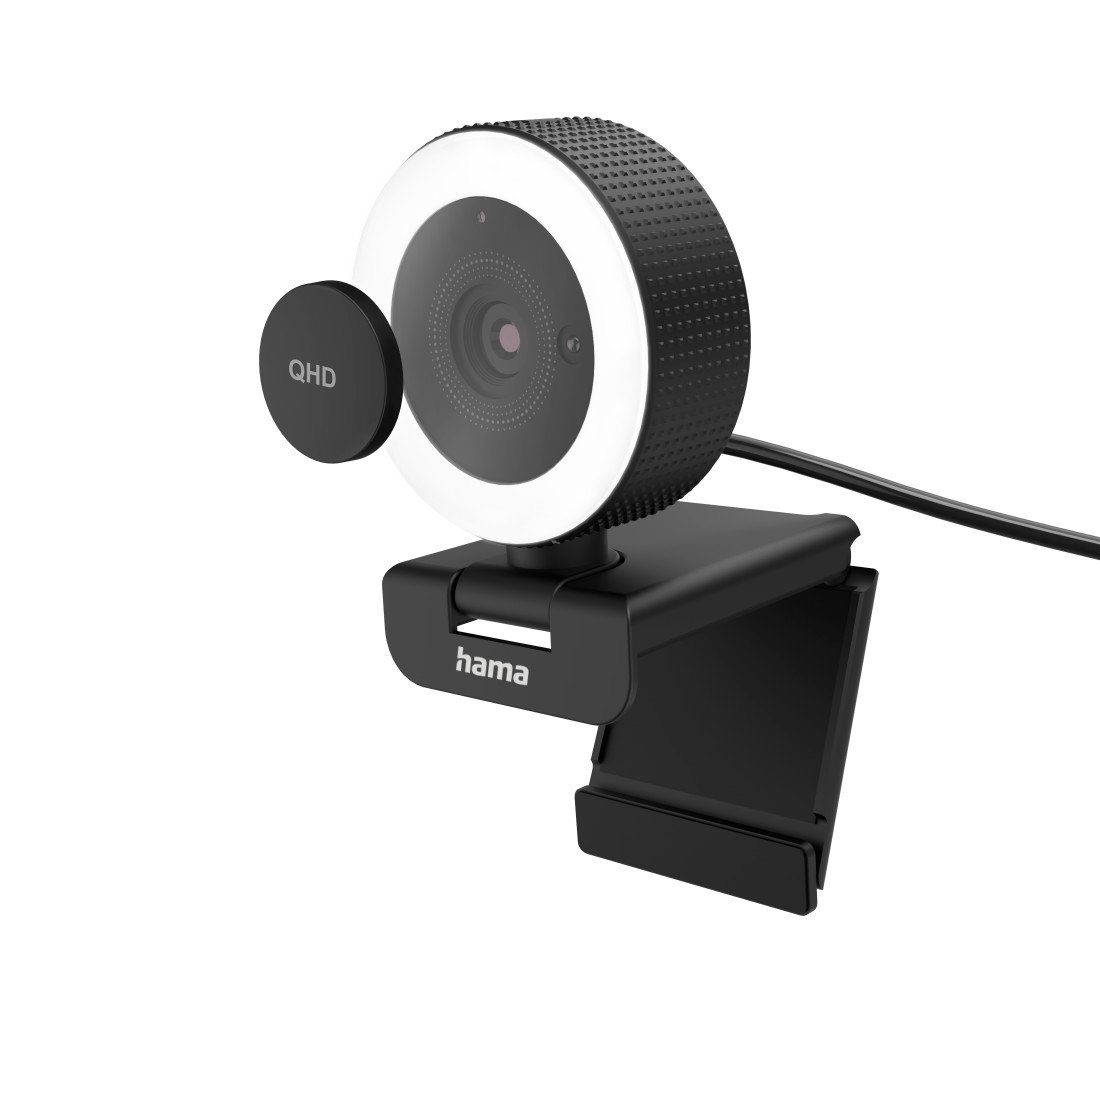 Hama PC Kamera, Webcam mit Ringlicht und Fernbedienung, Streaming, Gaming Full HD-Webcam (QHD, Beleuchtung, Neigbar, Drehbar, Mikrofon, LED Status, Farbe Schwarz)